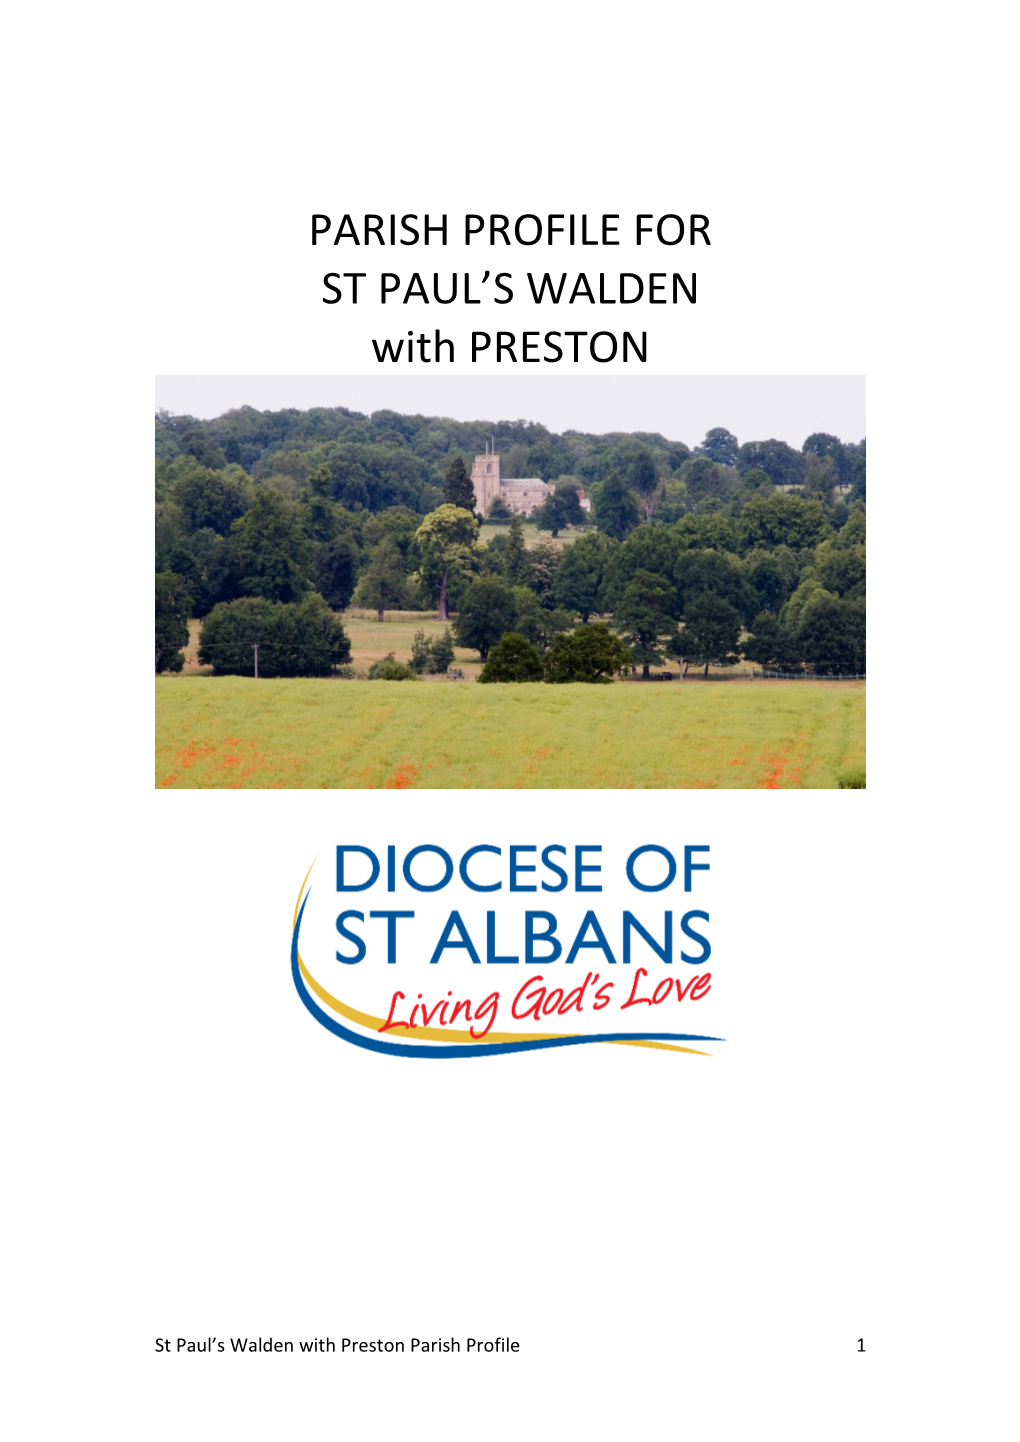 PARISH PROFILE for ST PAUL's WALDEN with PRESTON